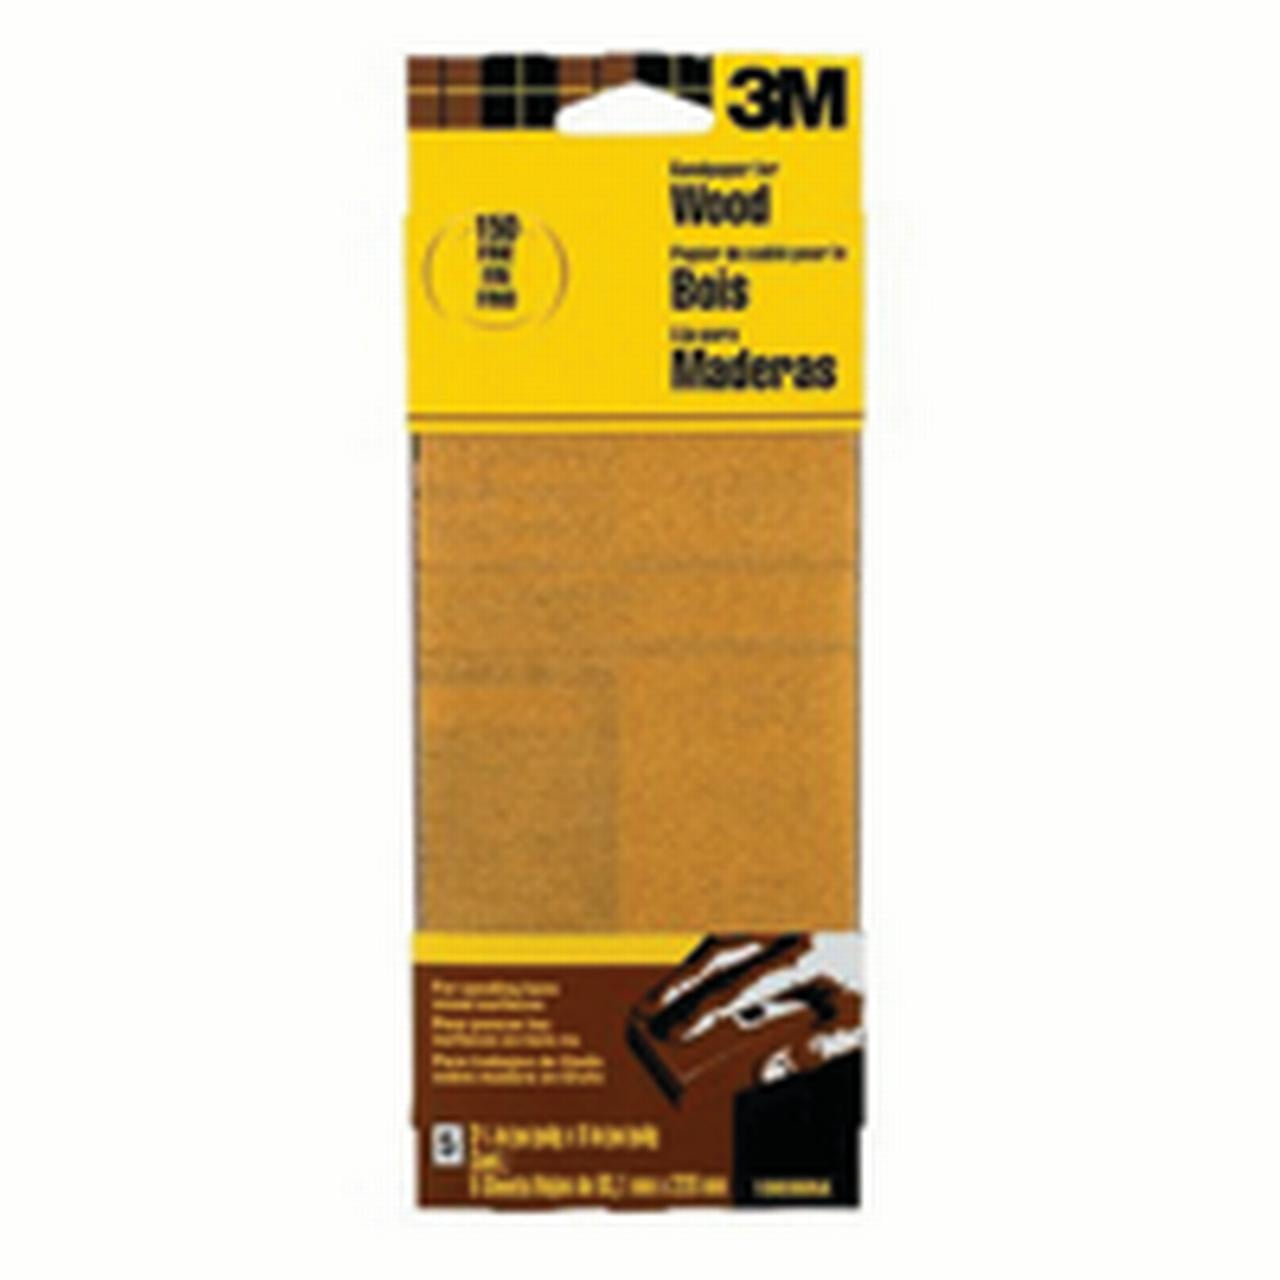 PORTER CABLE SANDPAPER Pack of 6 220 Grit 1/4 Sheet Clamp-On Sandpaper 53015 NEW 